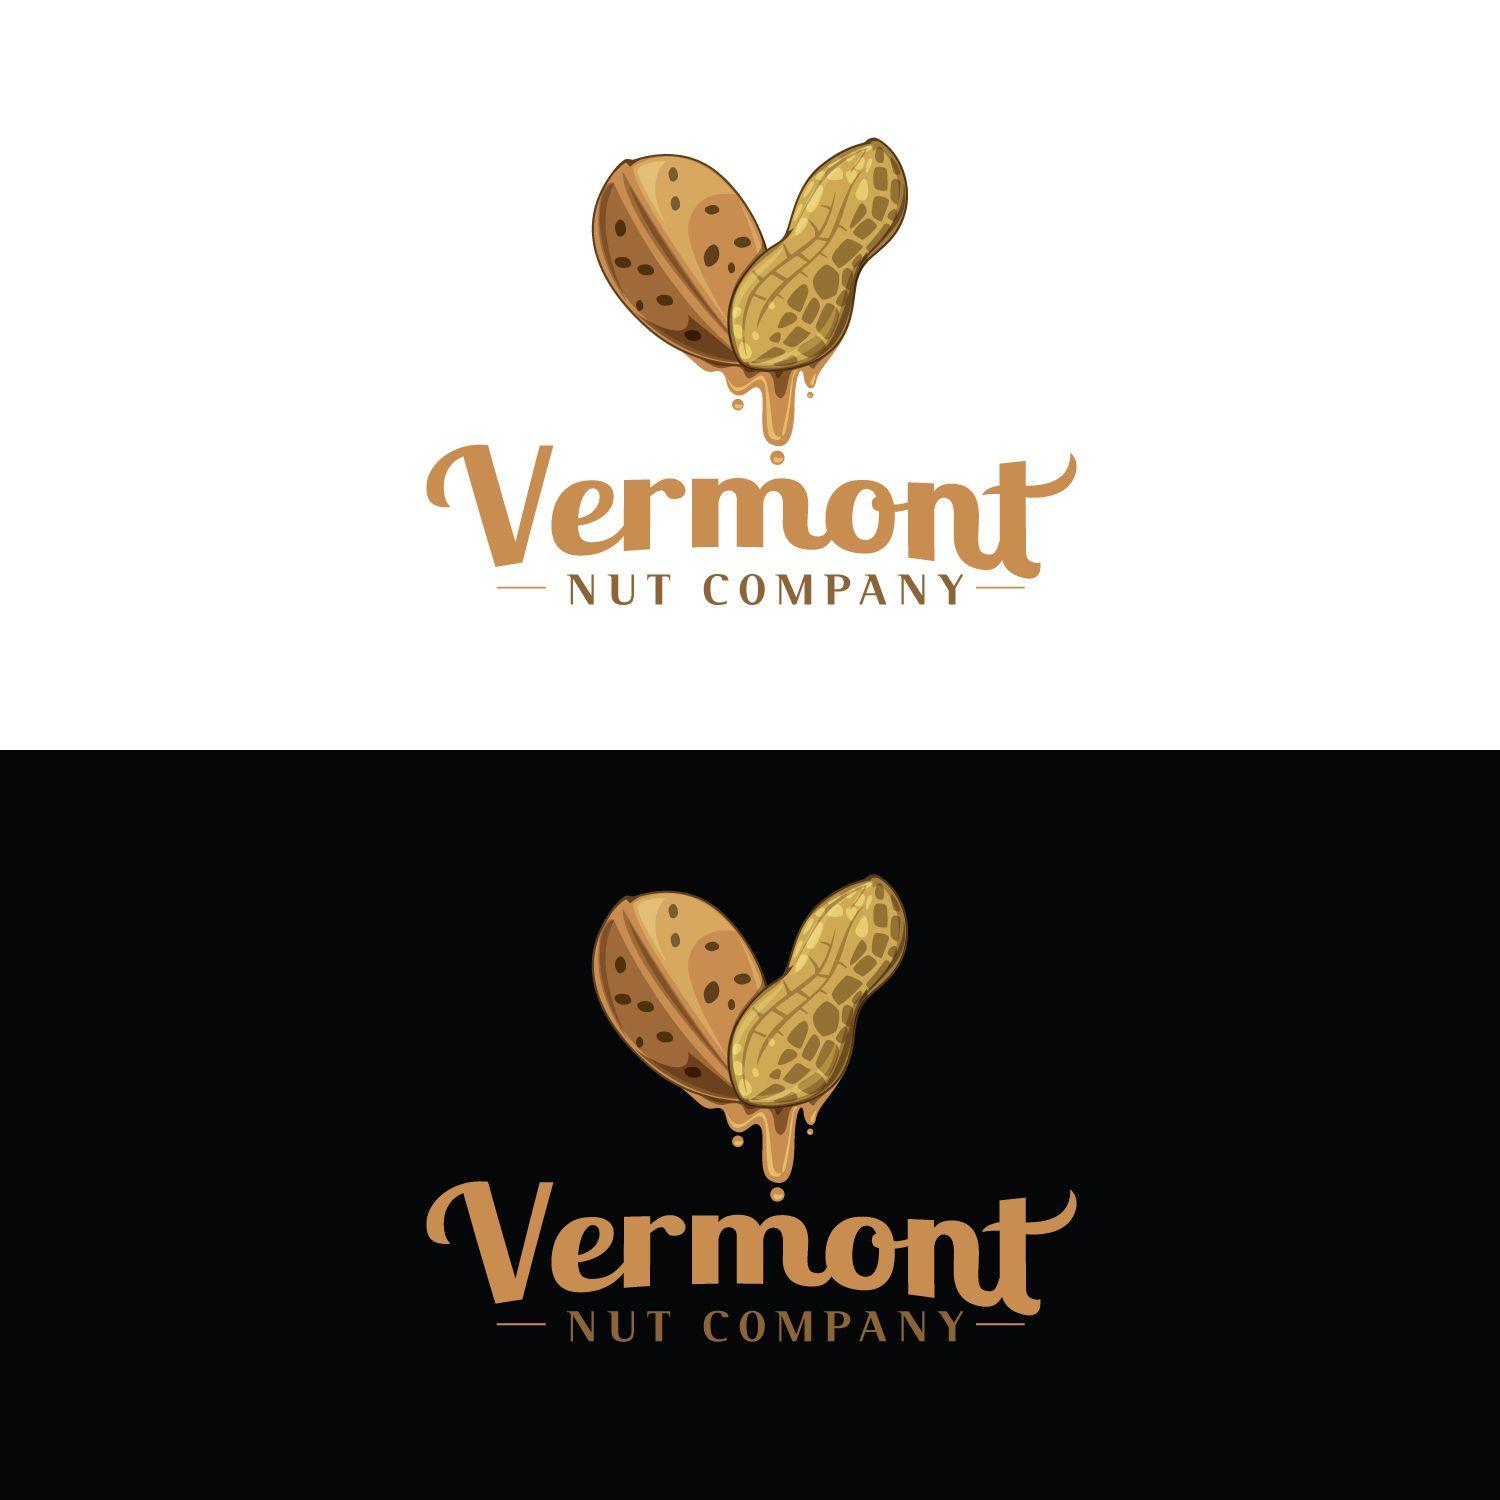 Nut Logo - Serious, Upmarket, Manufacturer Logo Design for Vermont Nut Company ...